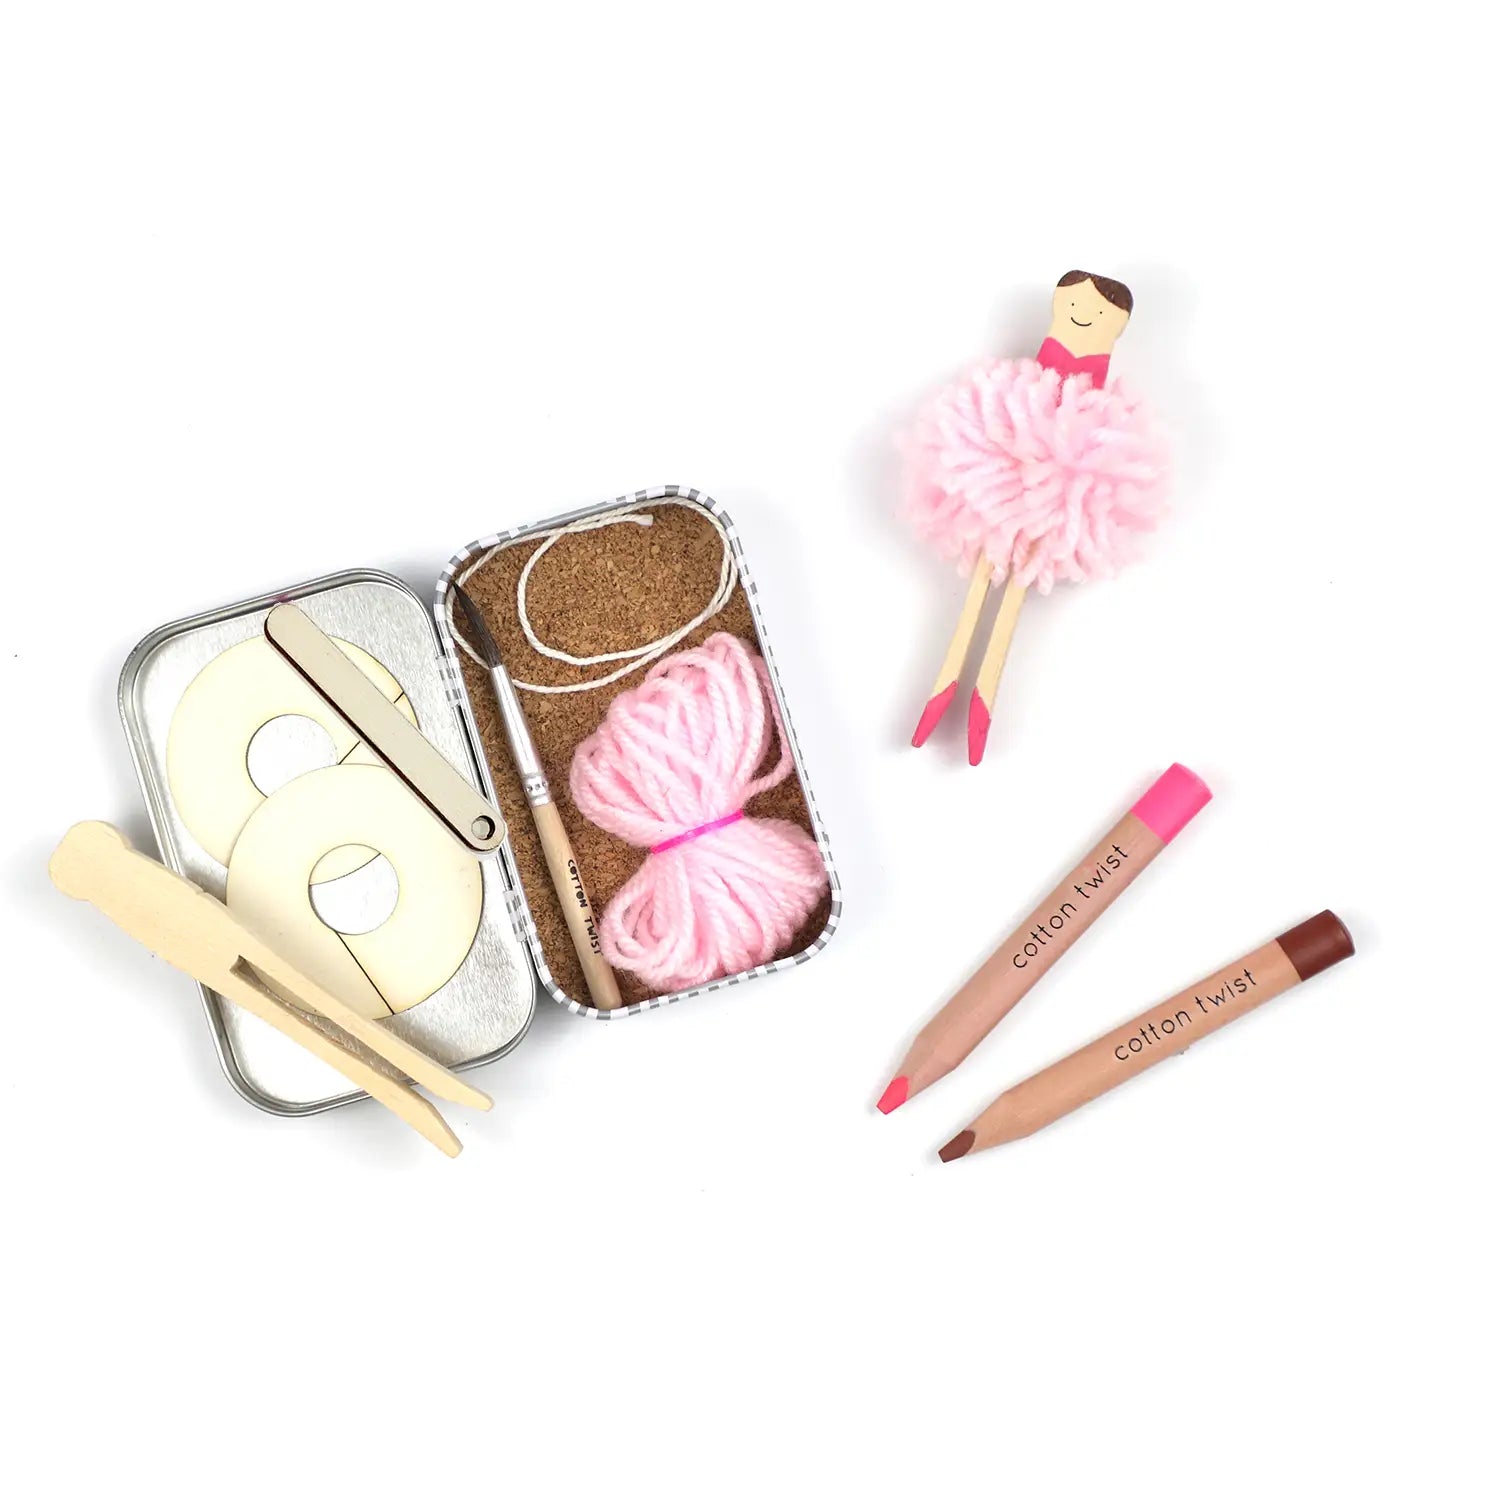 pom pom ballerina gift kit by Cotton Twist